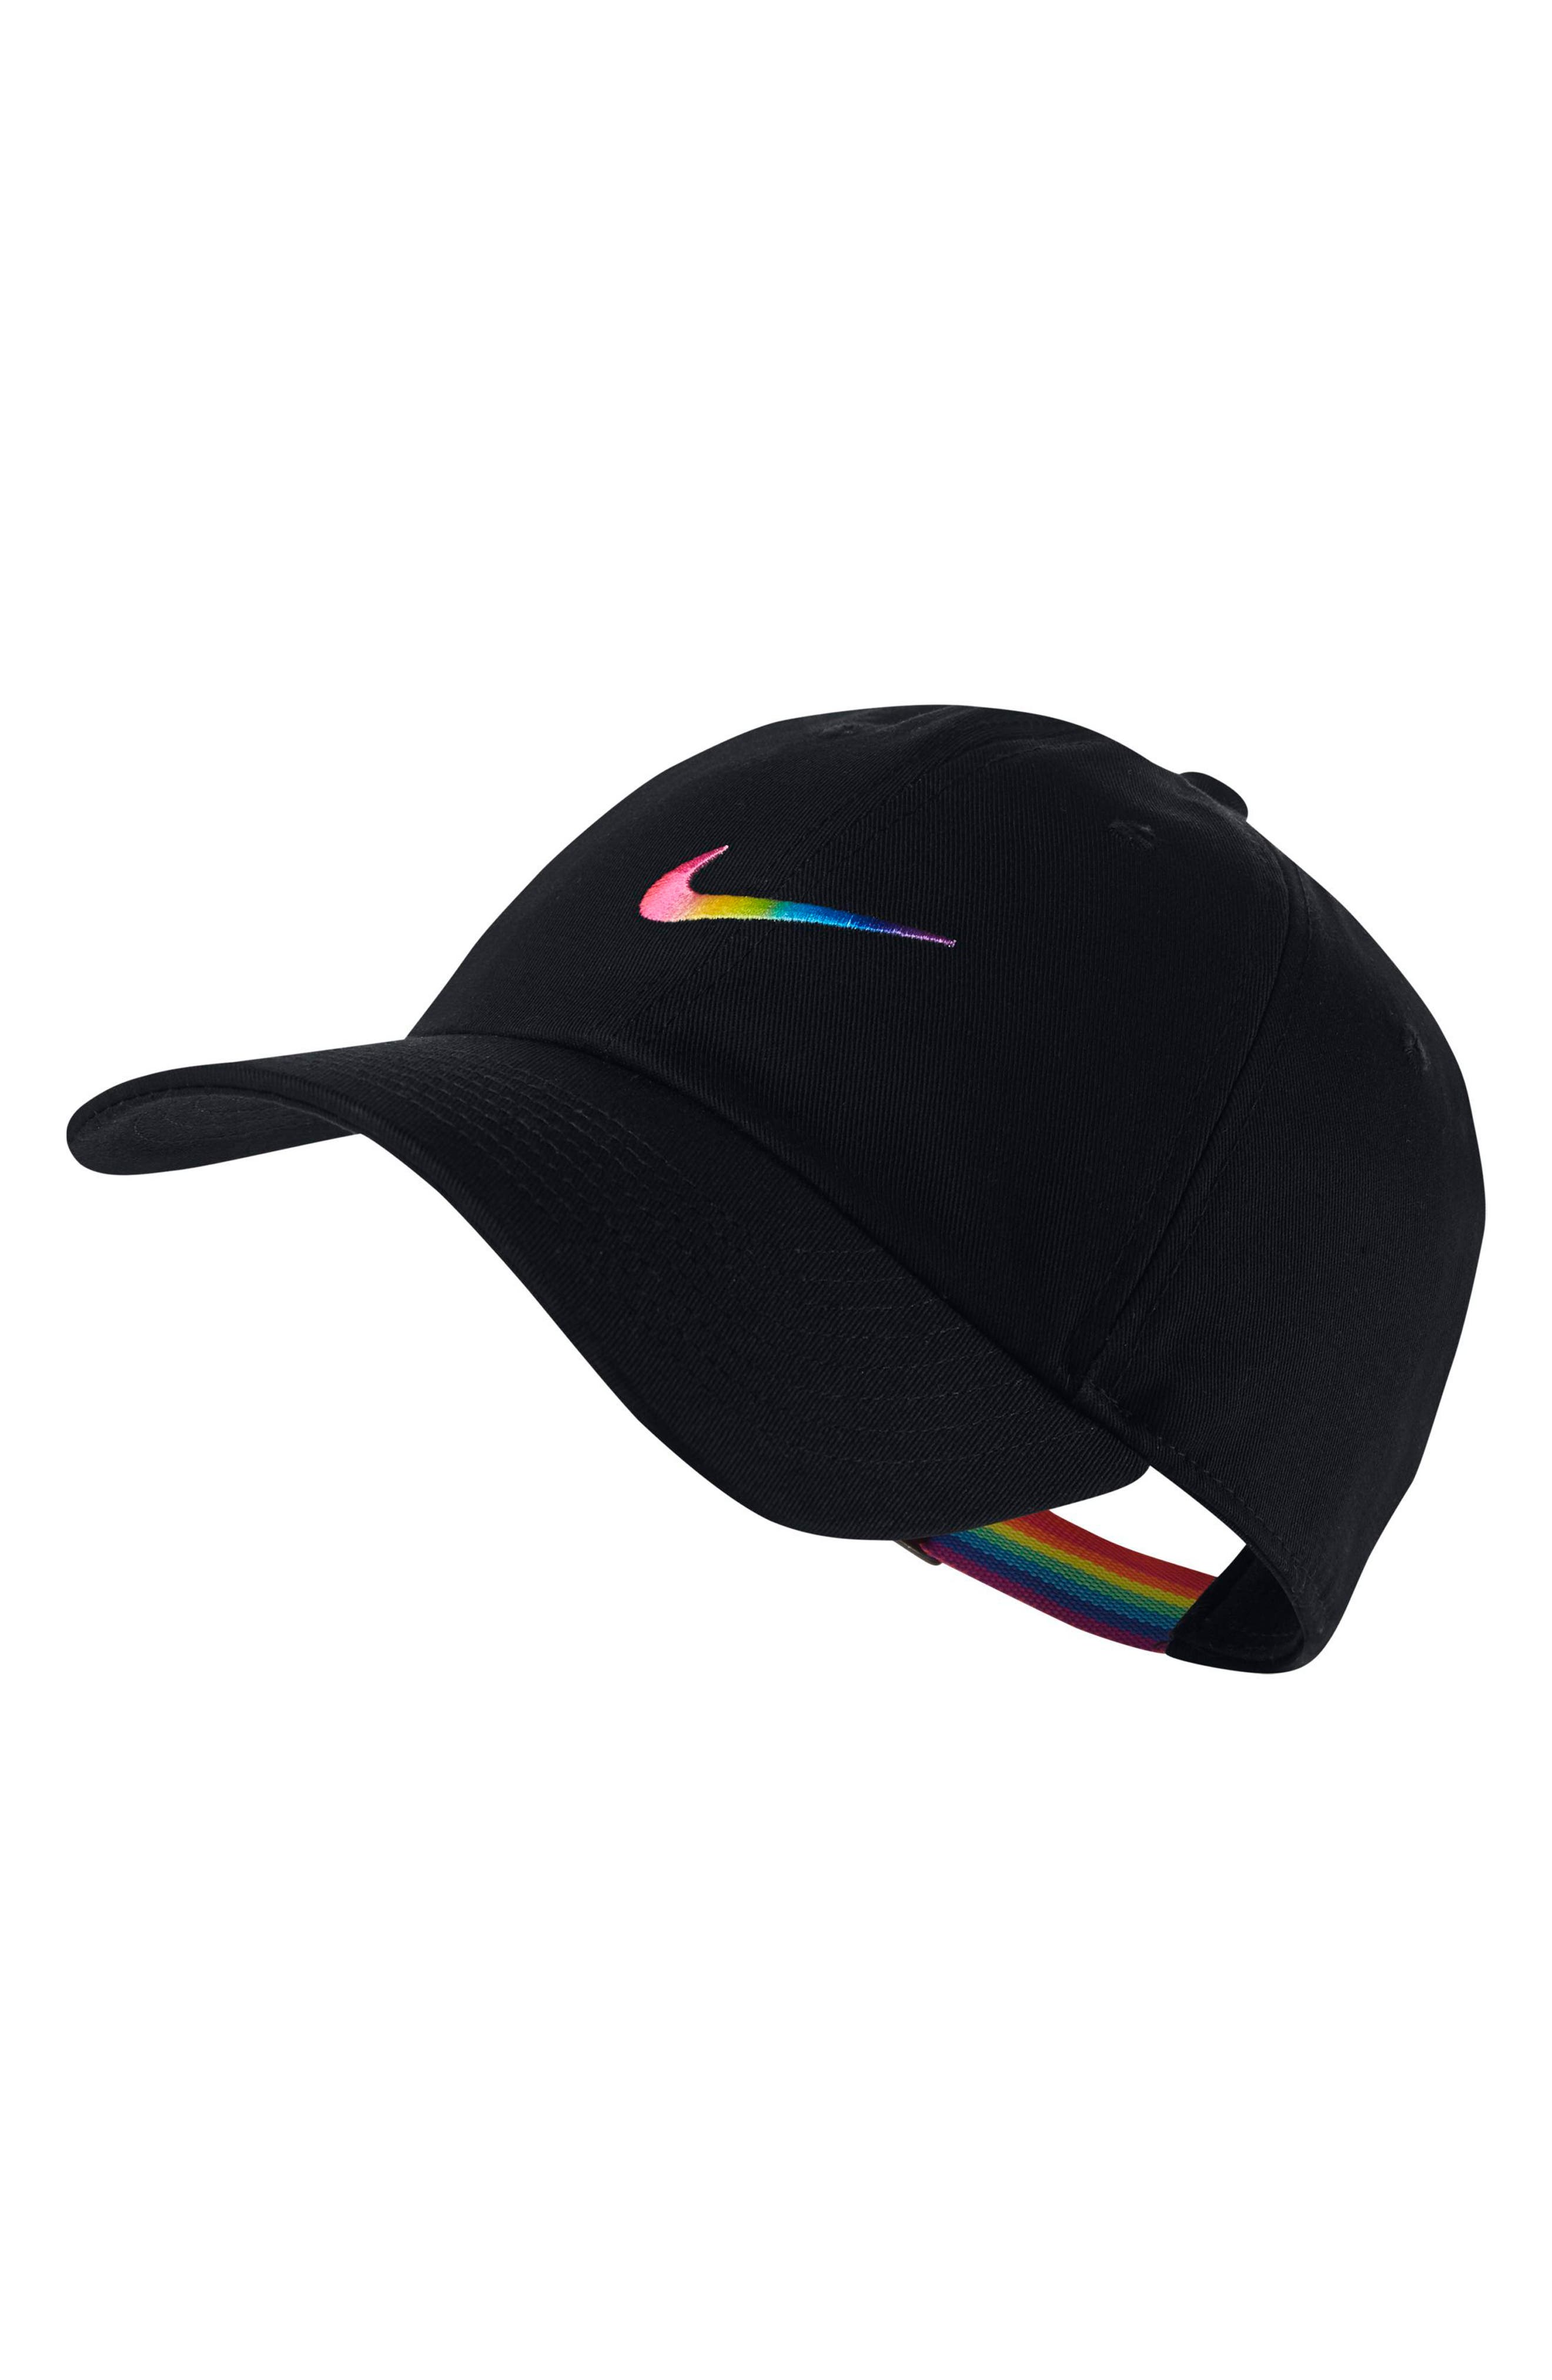 rainbow nike hat